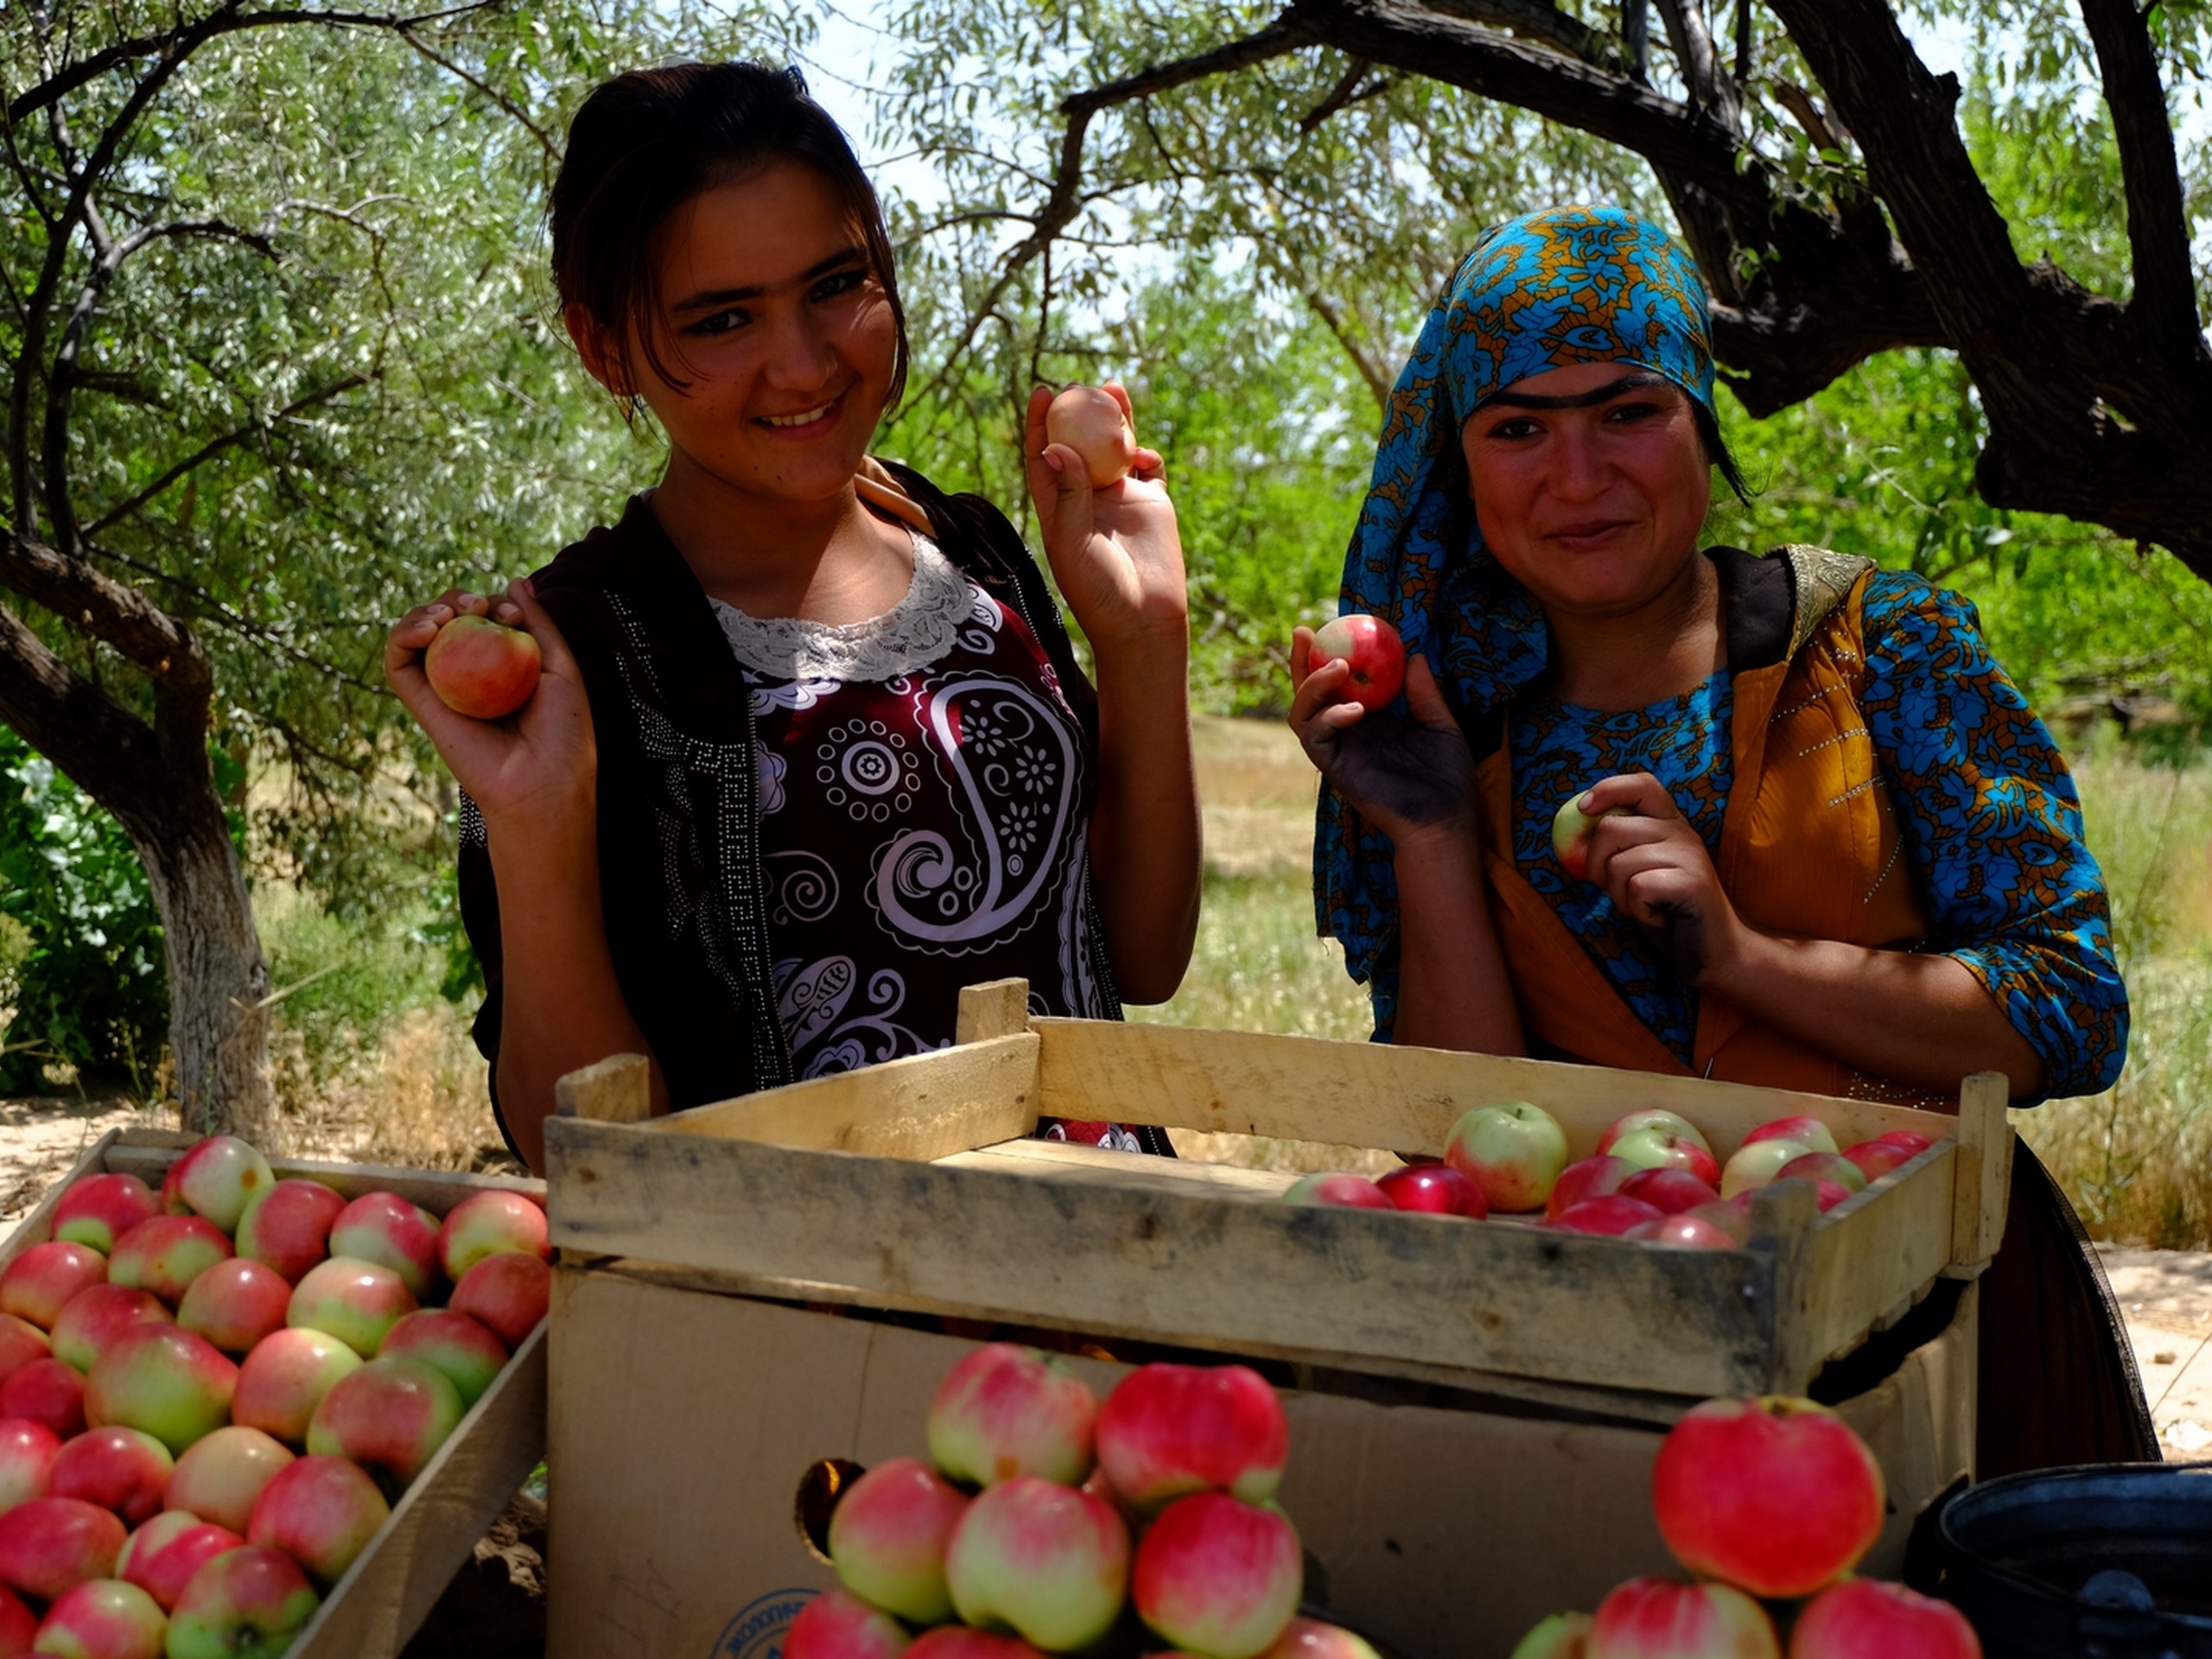 Uzbek girls selling the local produce